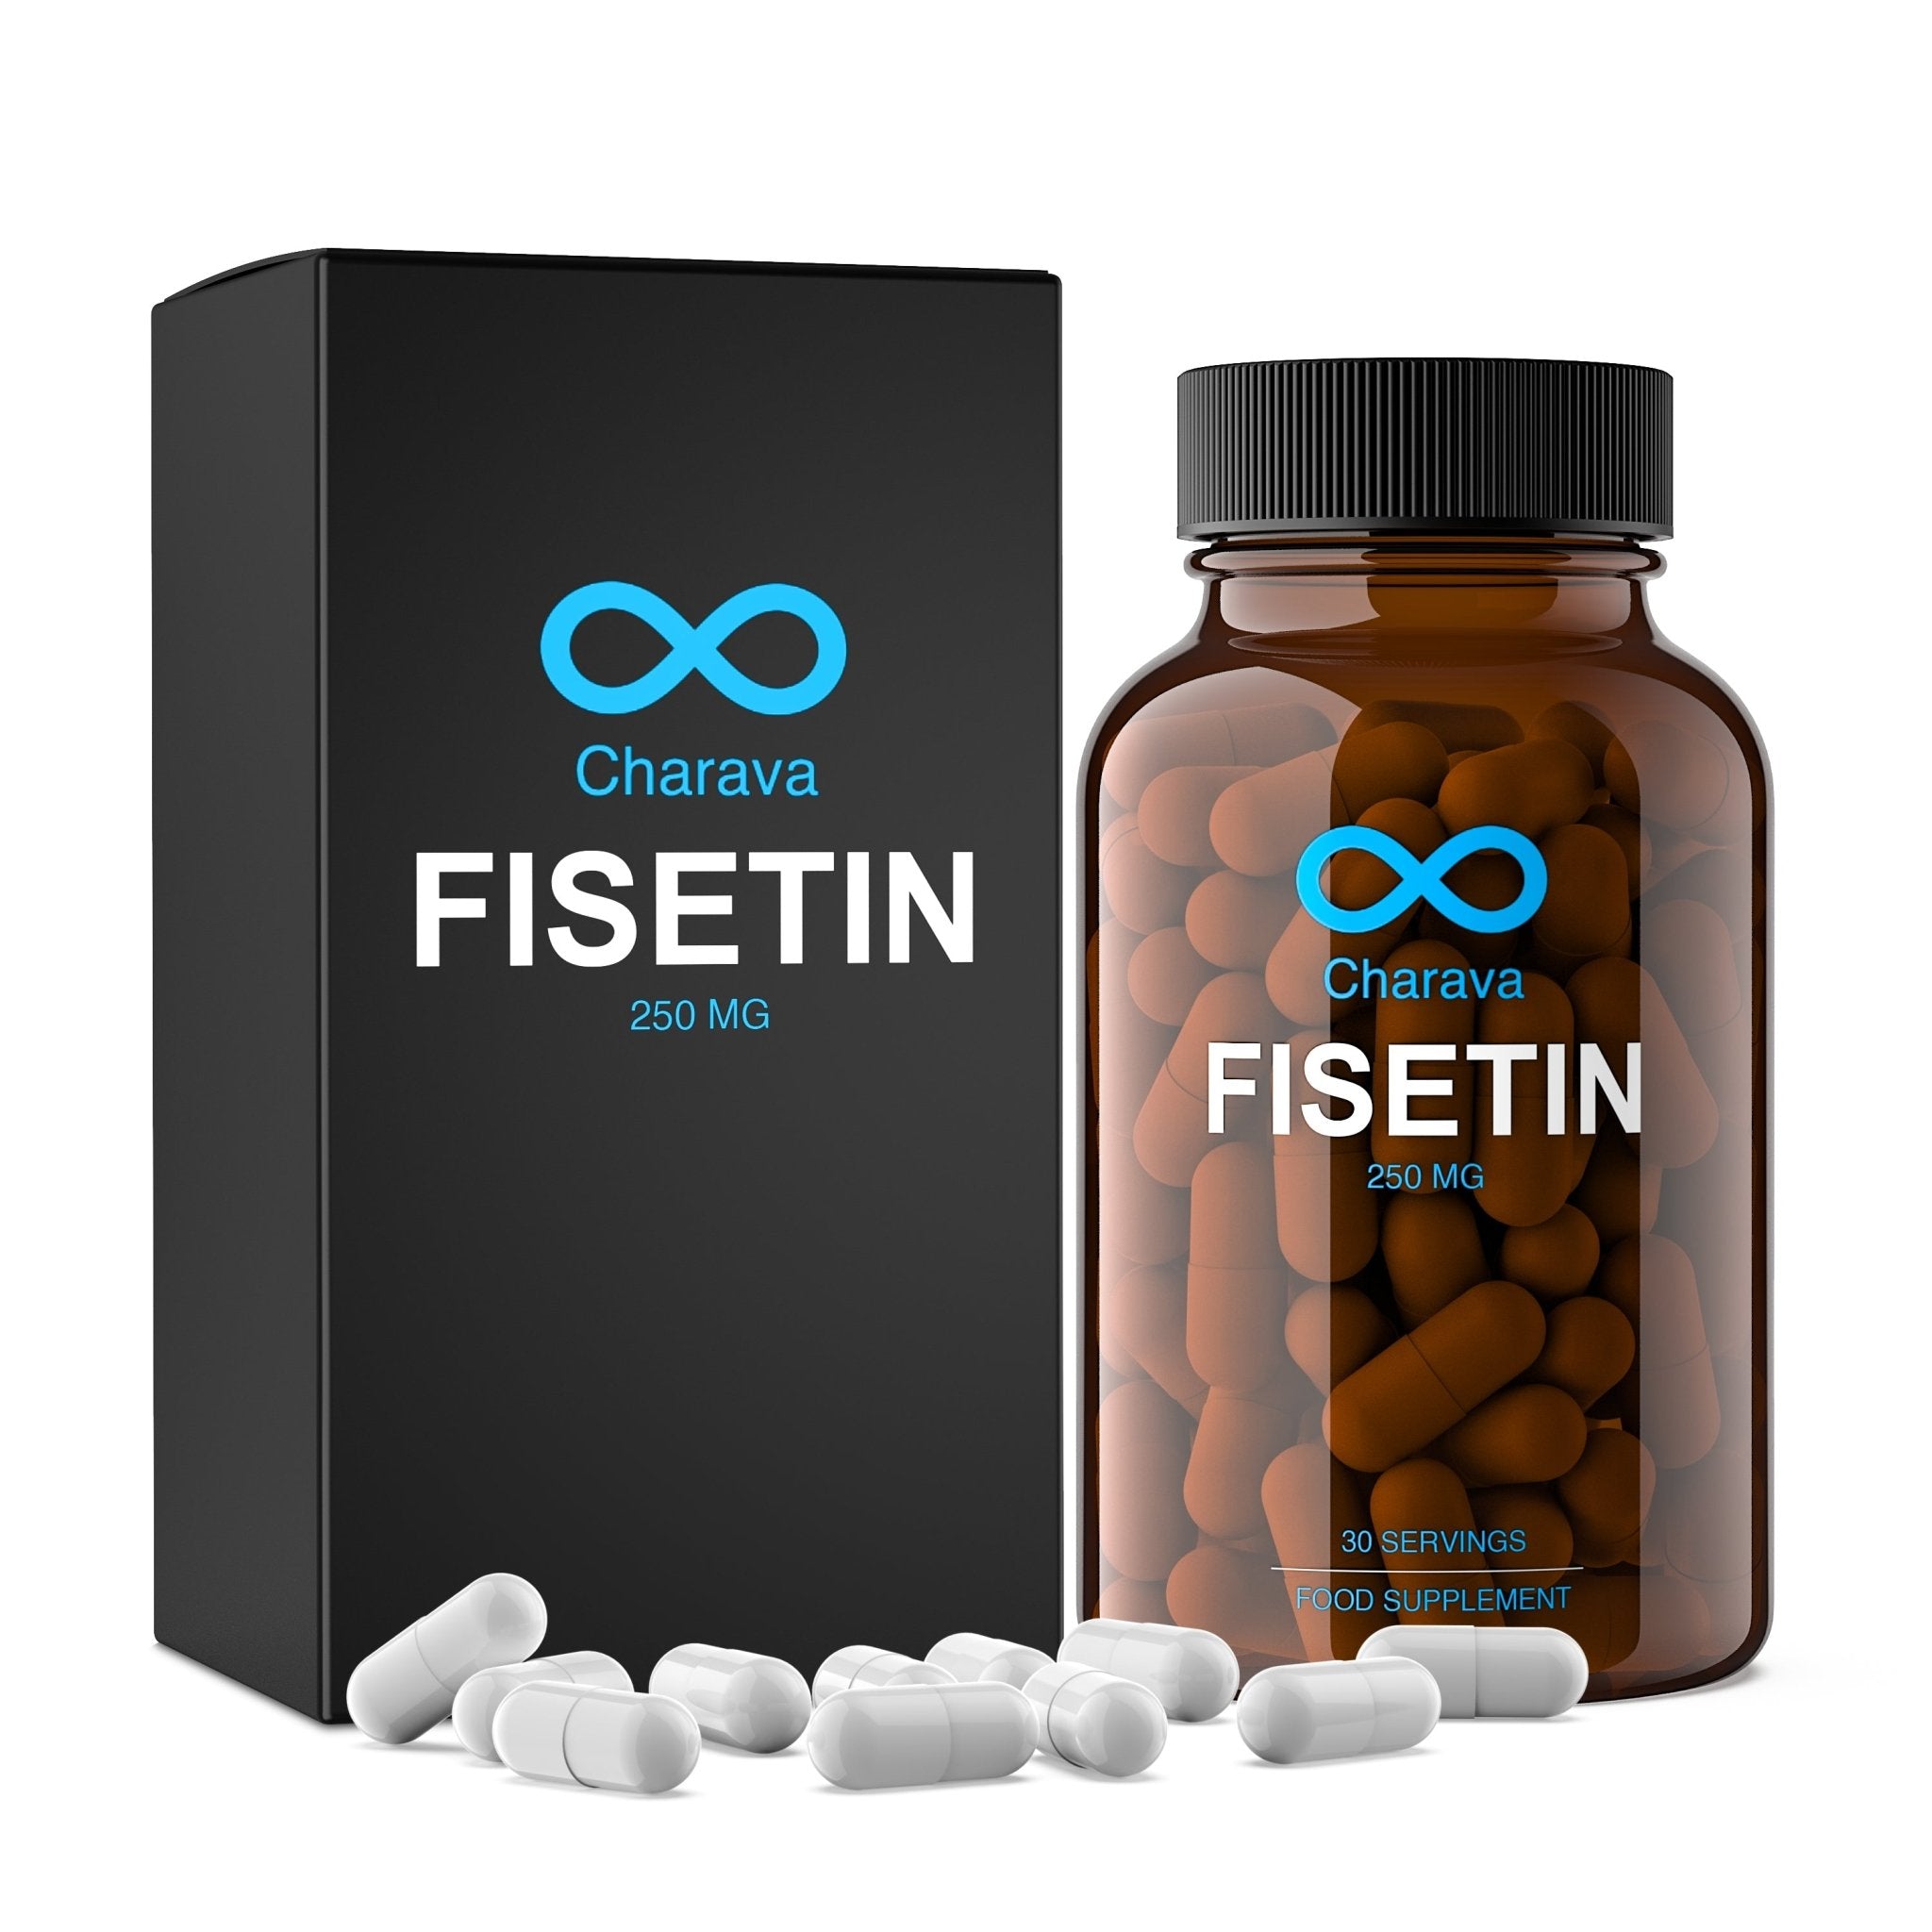 Fisetin Supplement for Healthy